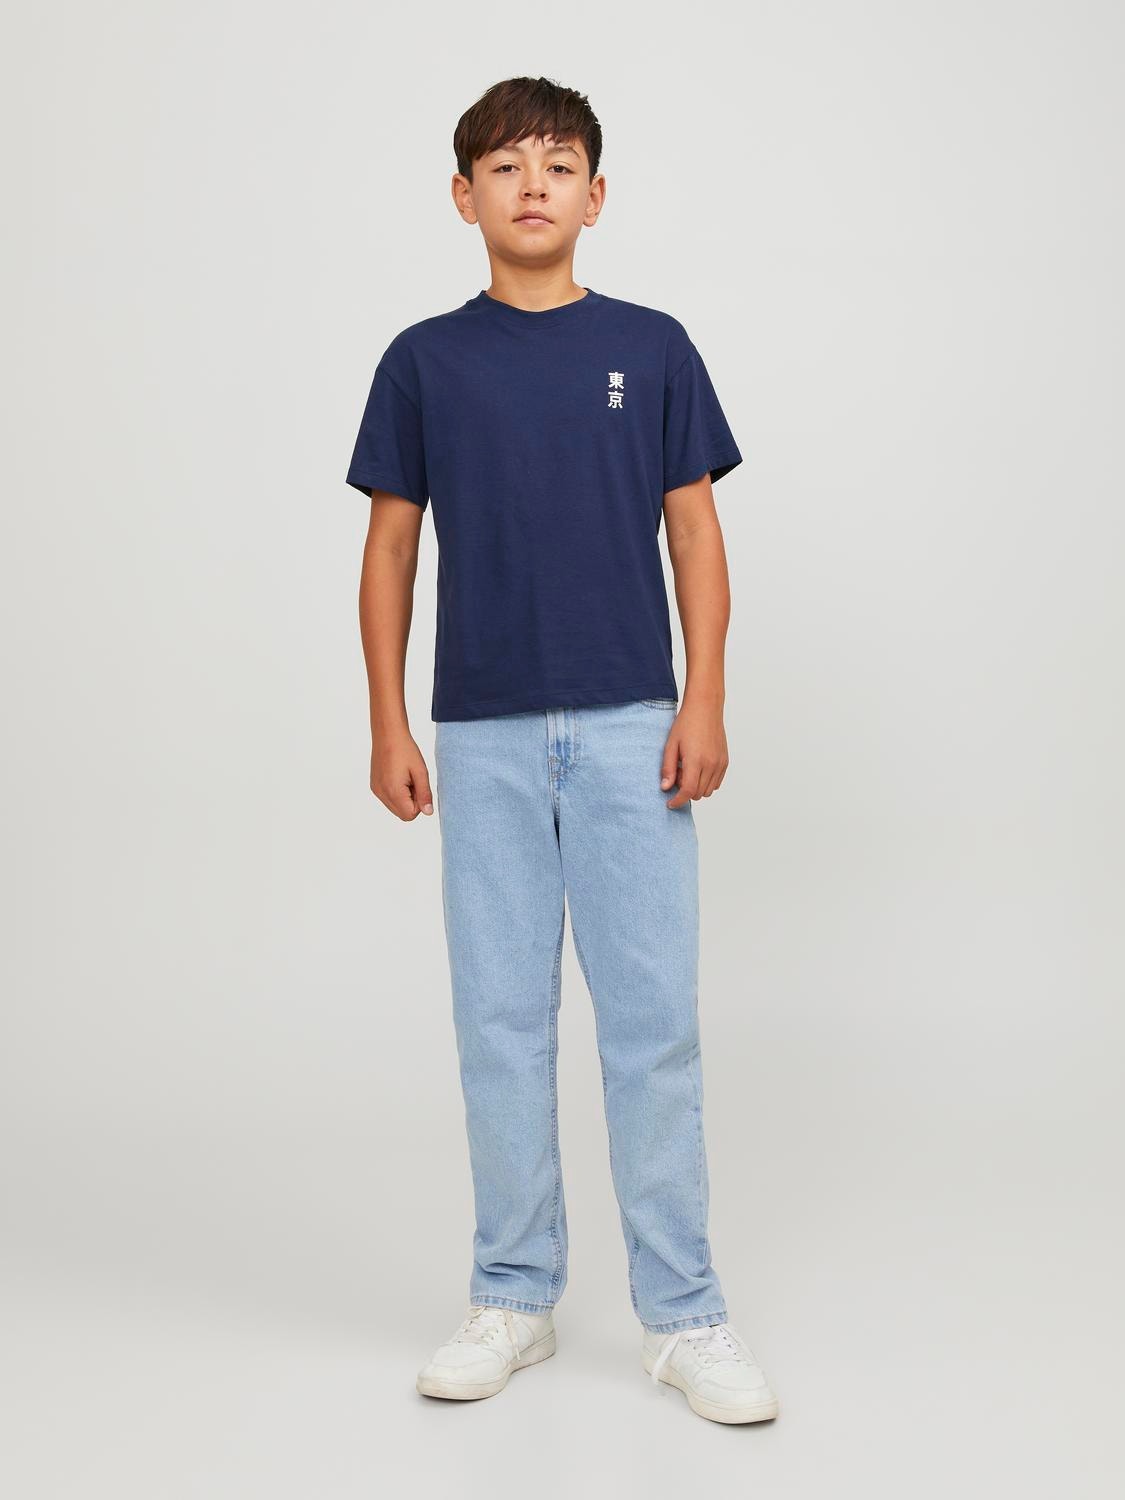 Jack & Jones Camiseta Estampado Para chicos -Navy Blazer - 12247655